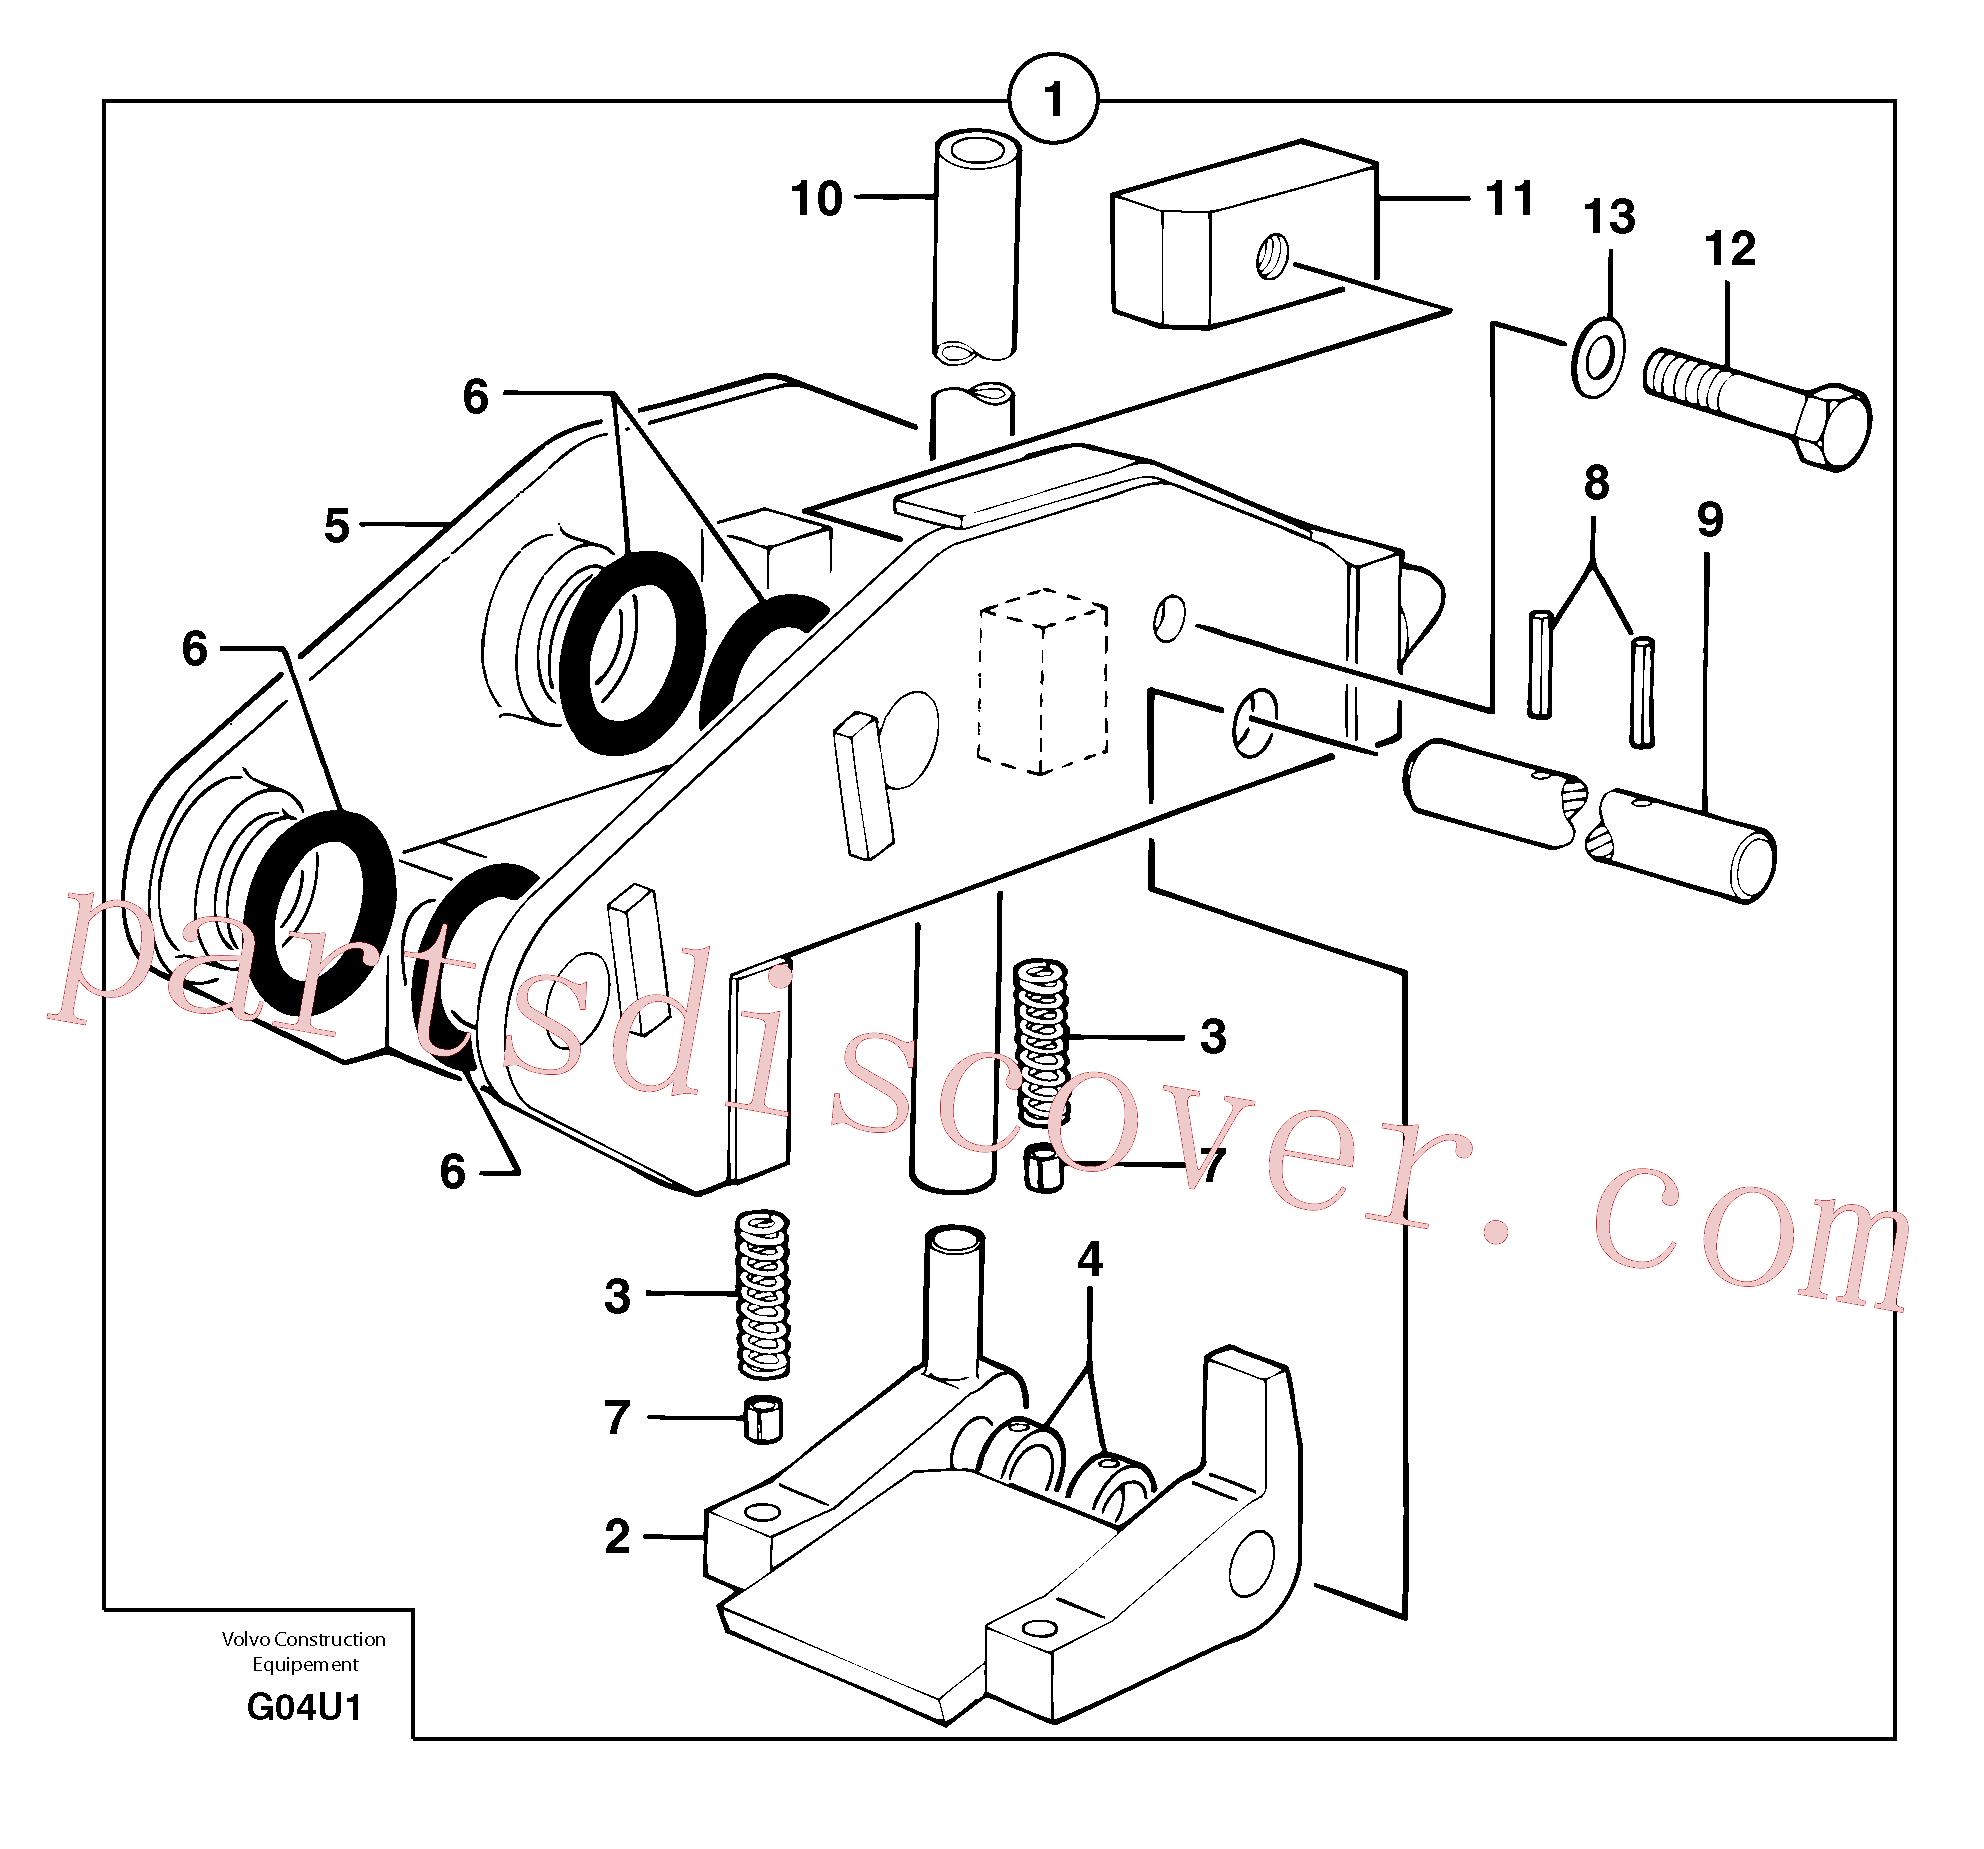 PJ3811415 for Volvo Tool holder / mechanical control(G04U1 assembly)